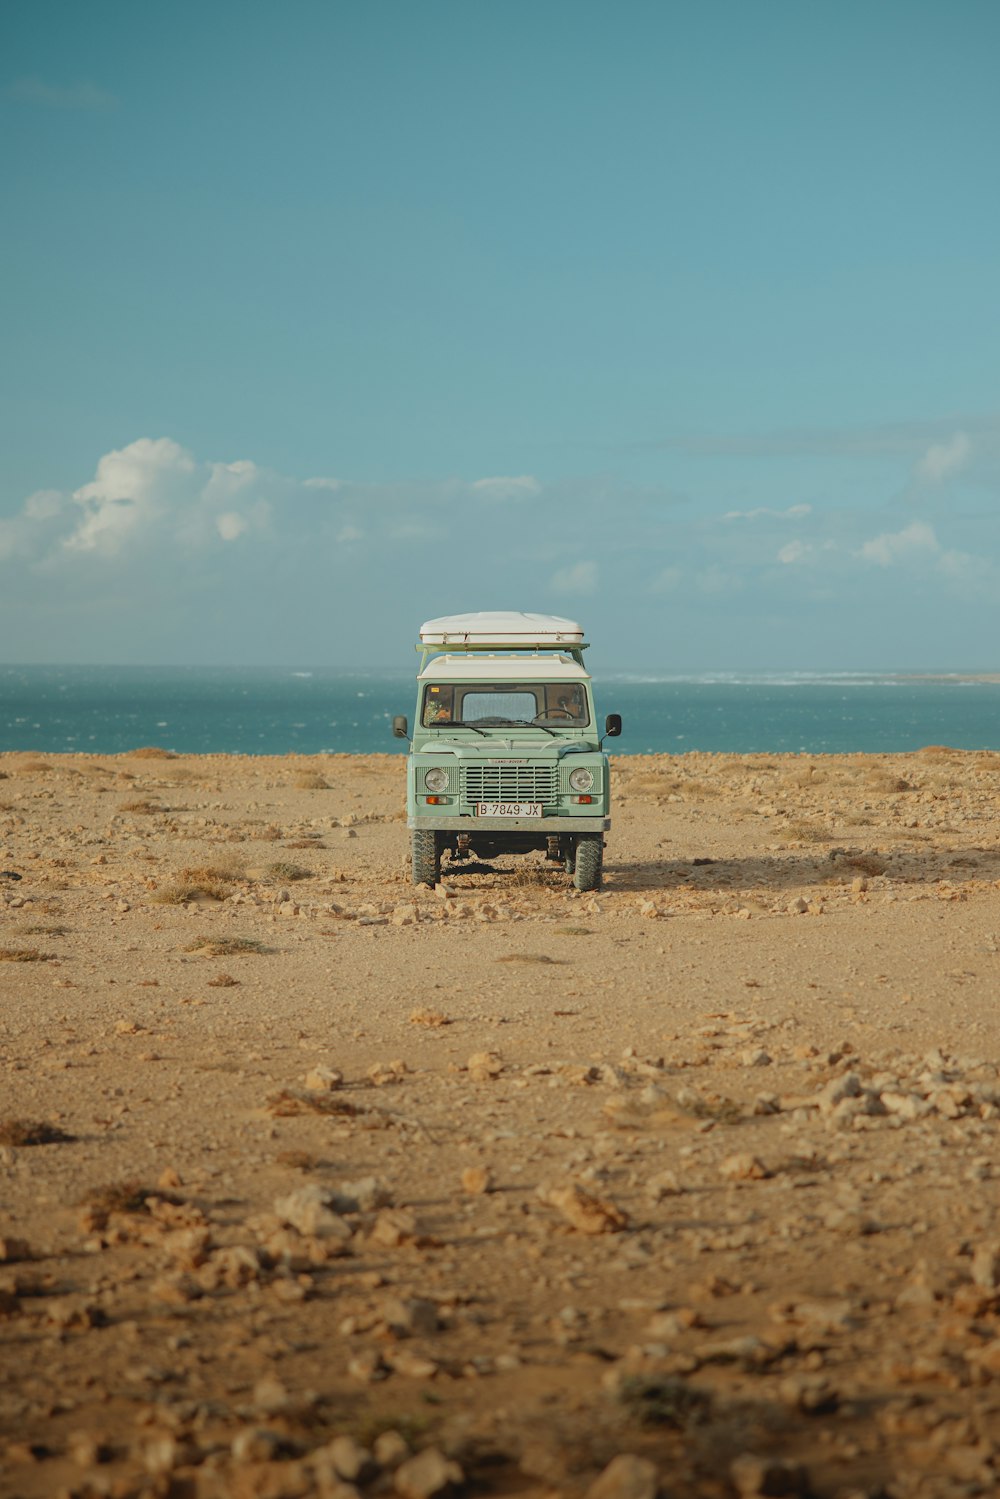 a van is parked on the beach near the ocean